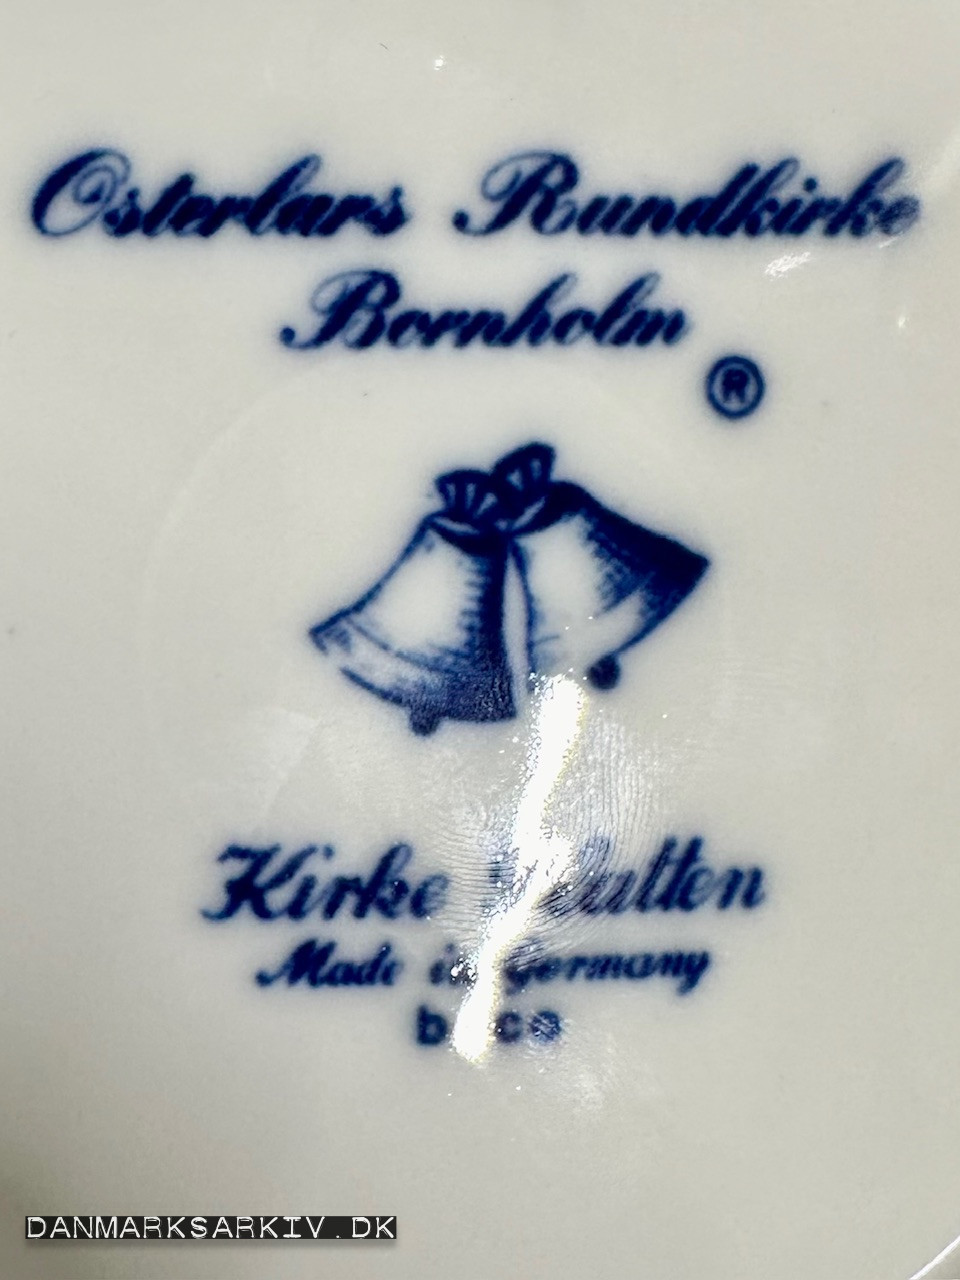 Østerlars Rundkirke Bornholm - Kirkeplatten Made in Germany Julen 1976